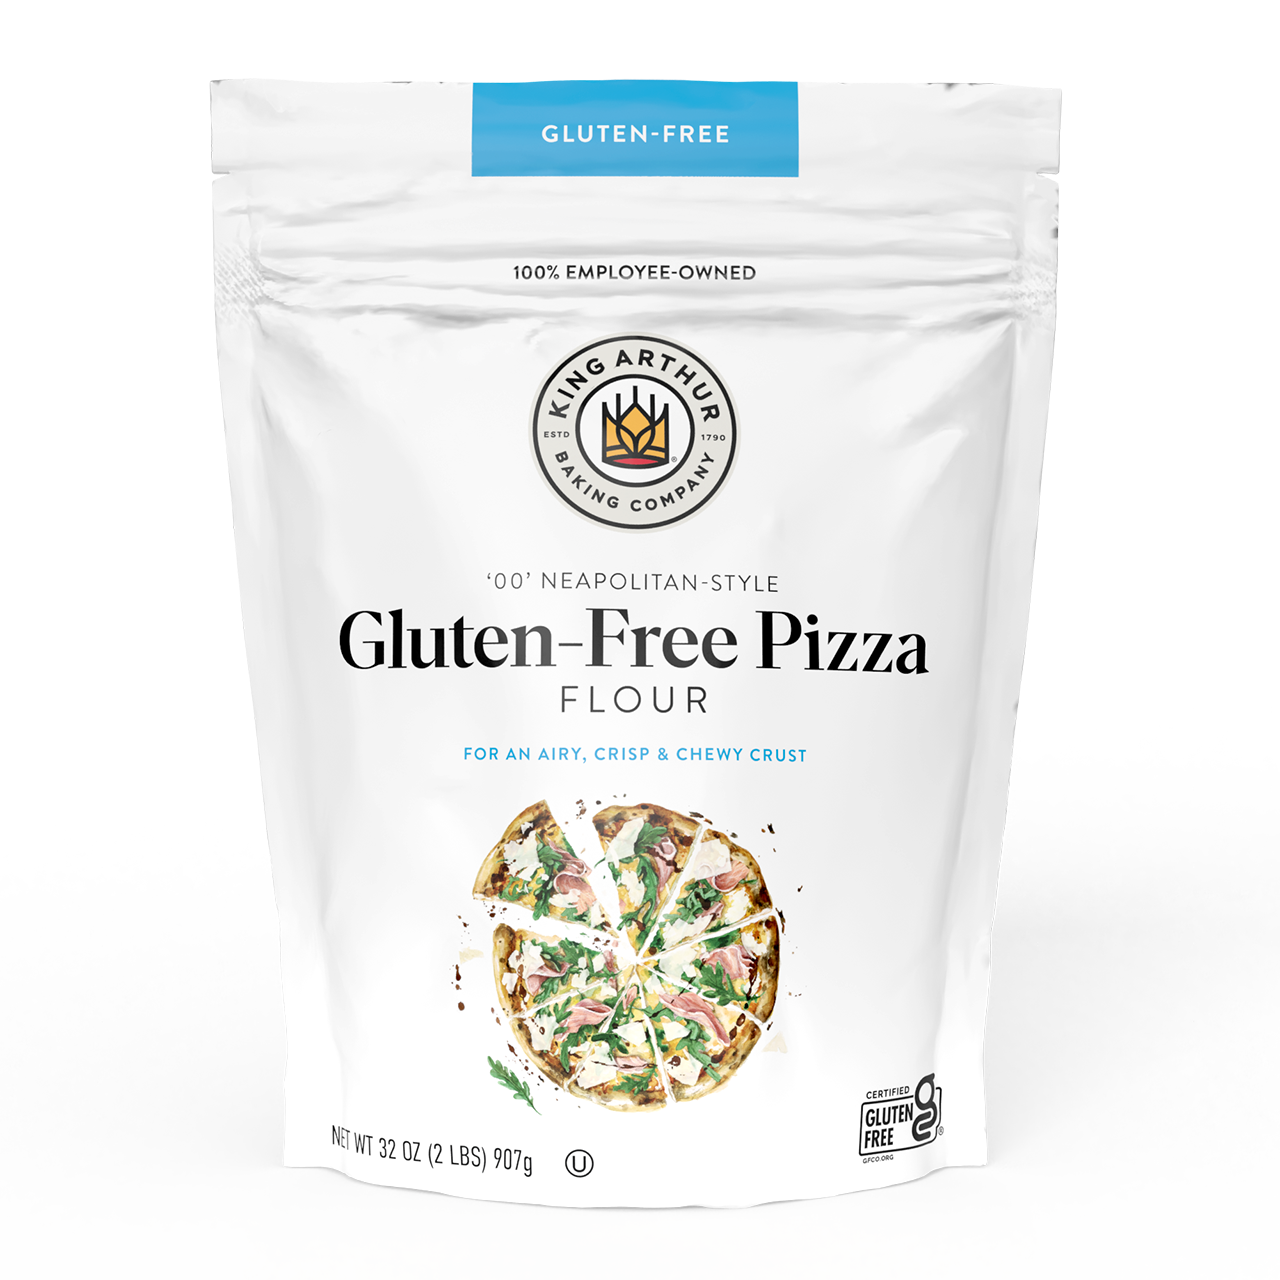 Gluten-Free '00' Pizza Flour from King Arthur Baking Company